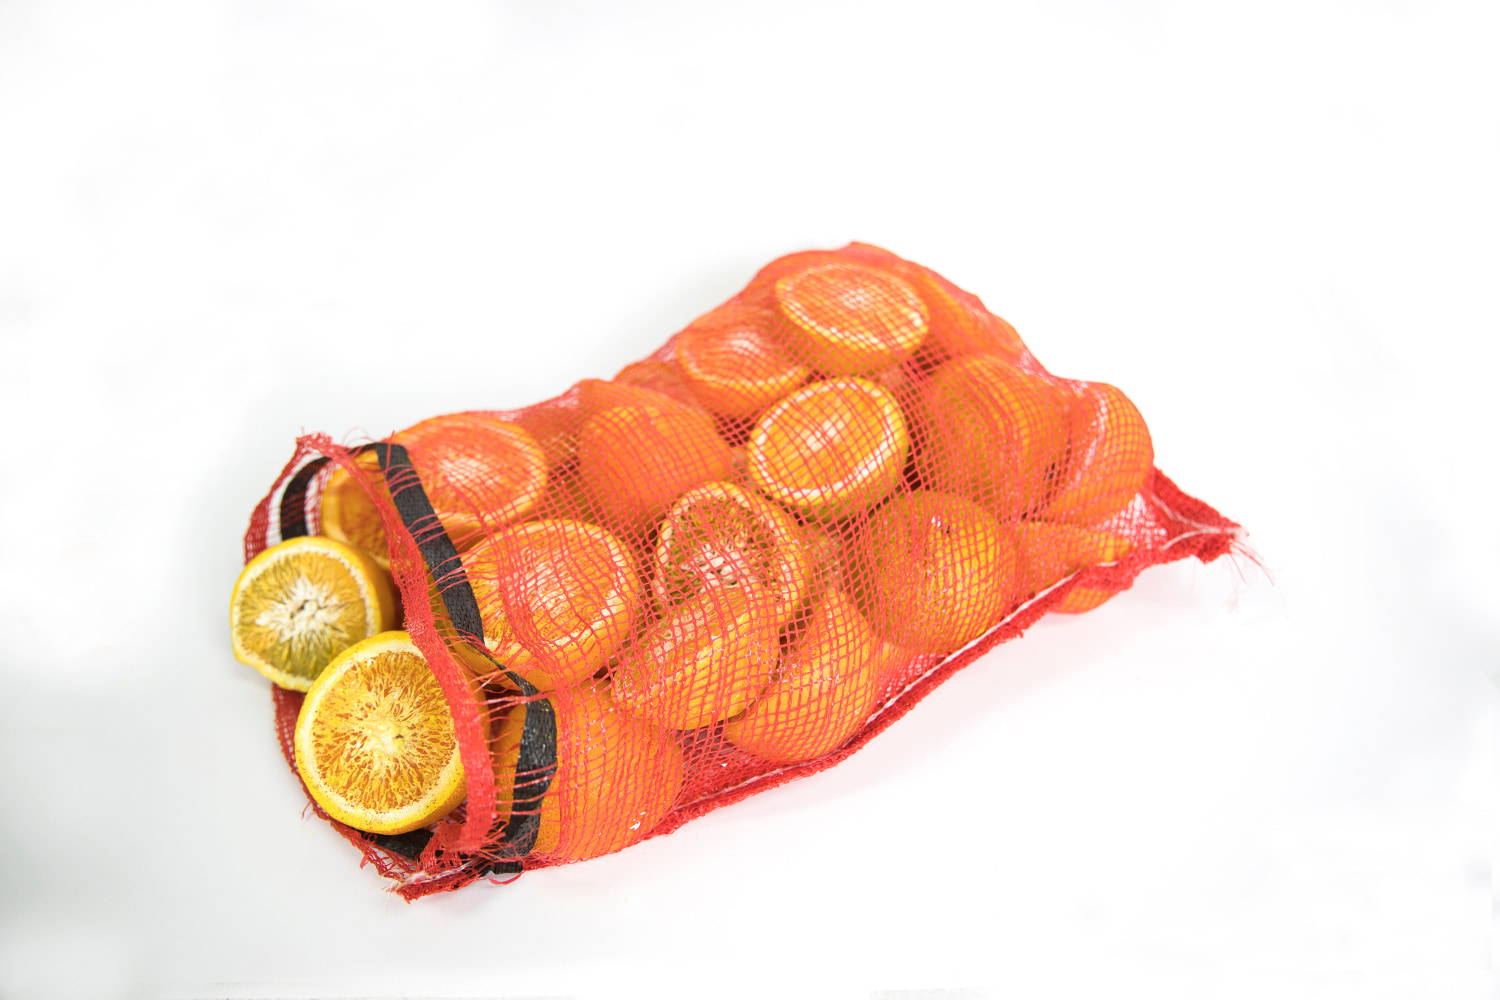 Tyler Macko
Bag Of Oranges #4, 2018
Resin, oil, acrylic, nylon bag
Dimensions Variable